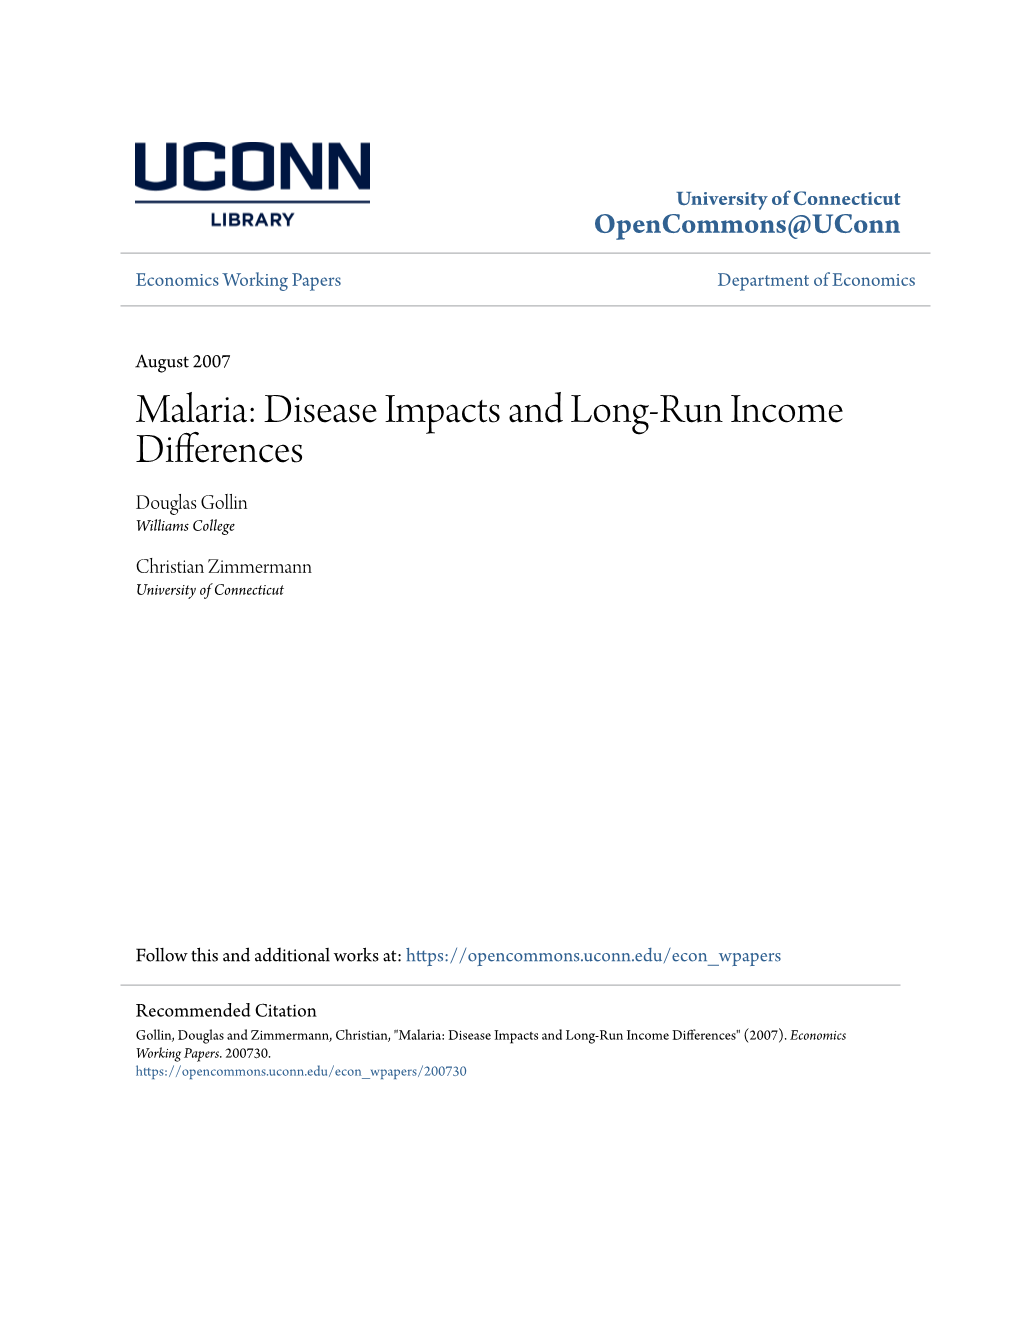 Malaria: Disease Impacts and Long-Run Income Differences Douglas Gollin Williams College